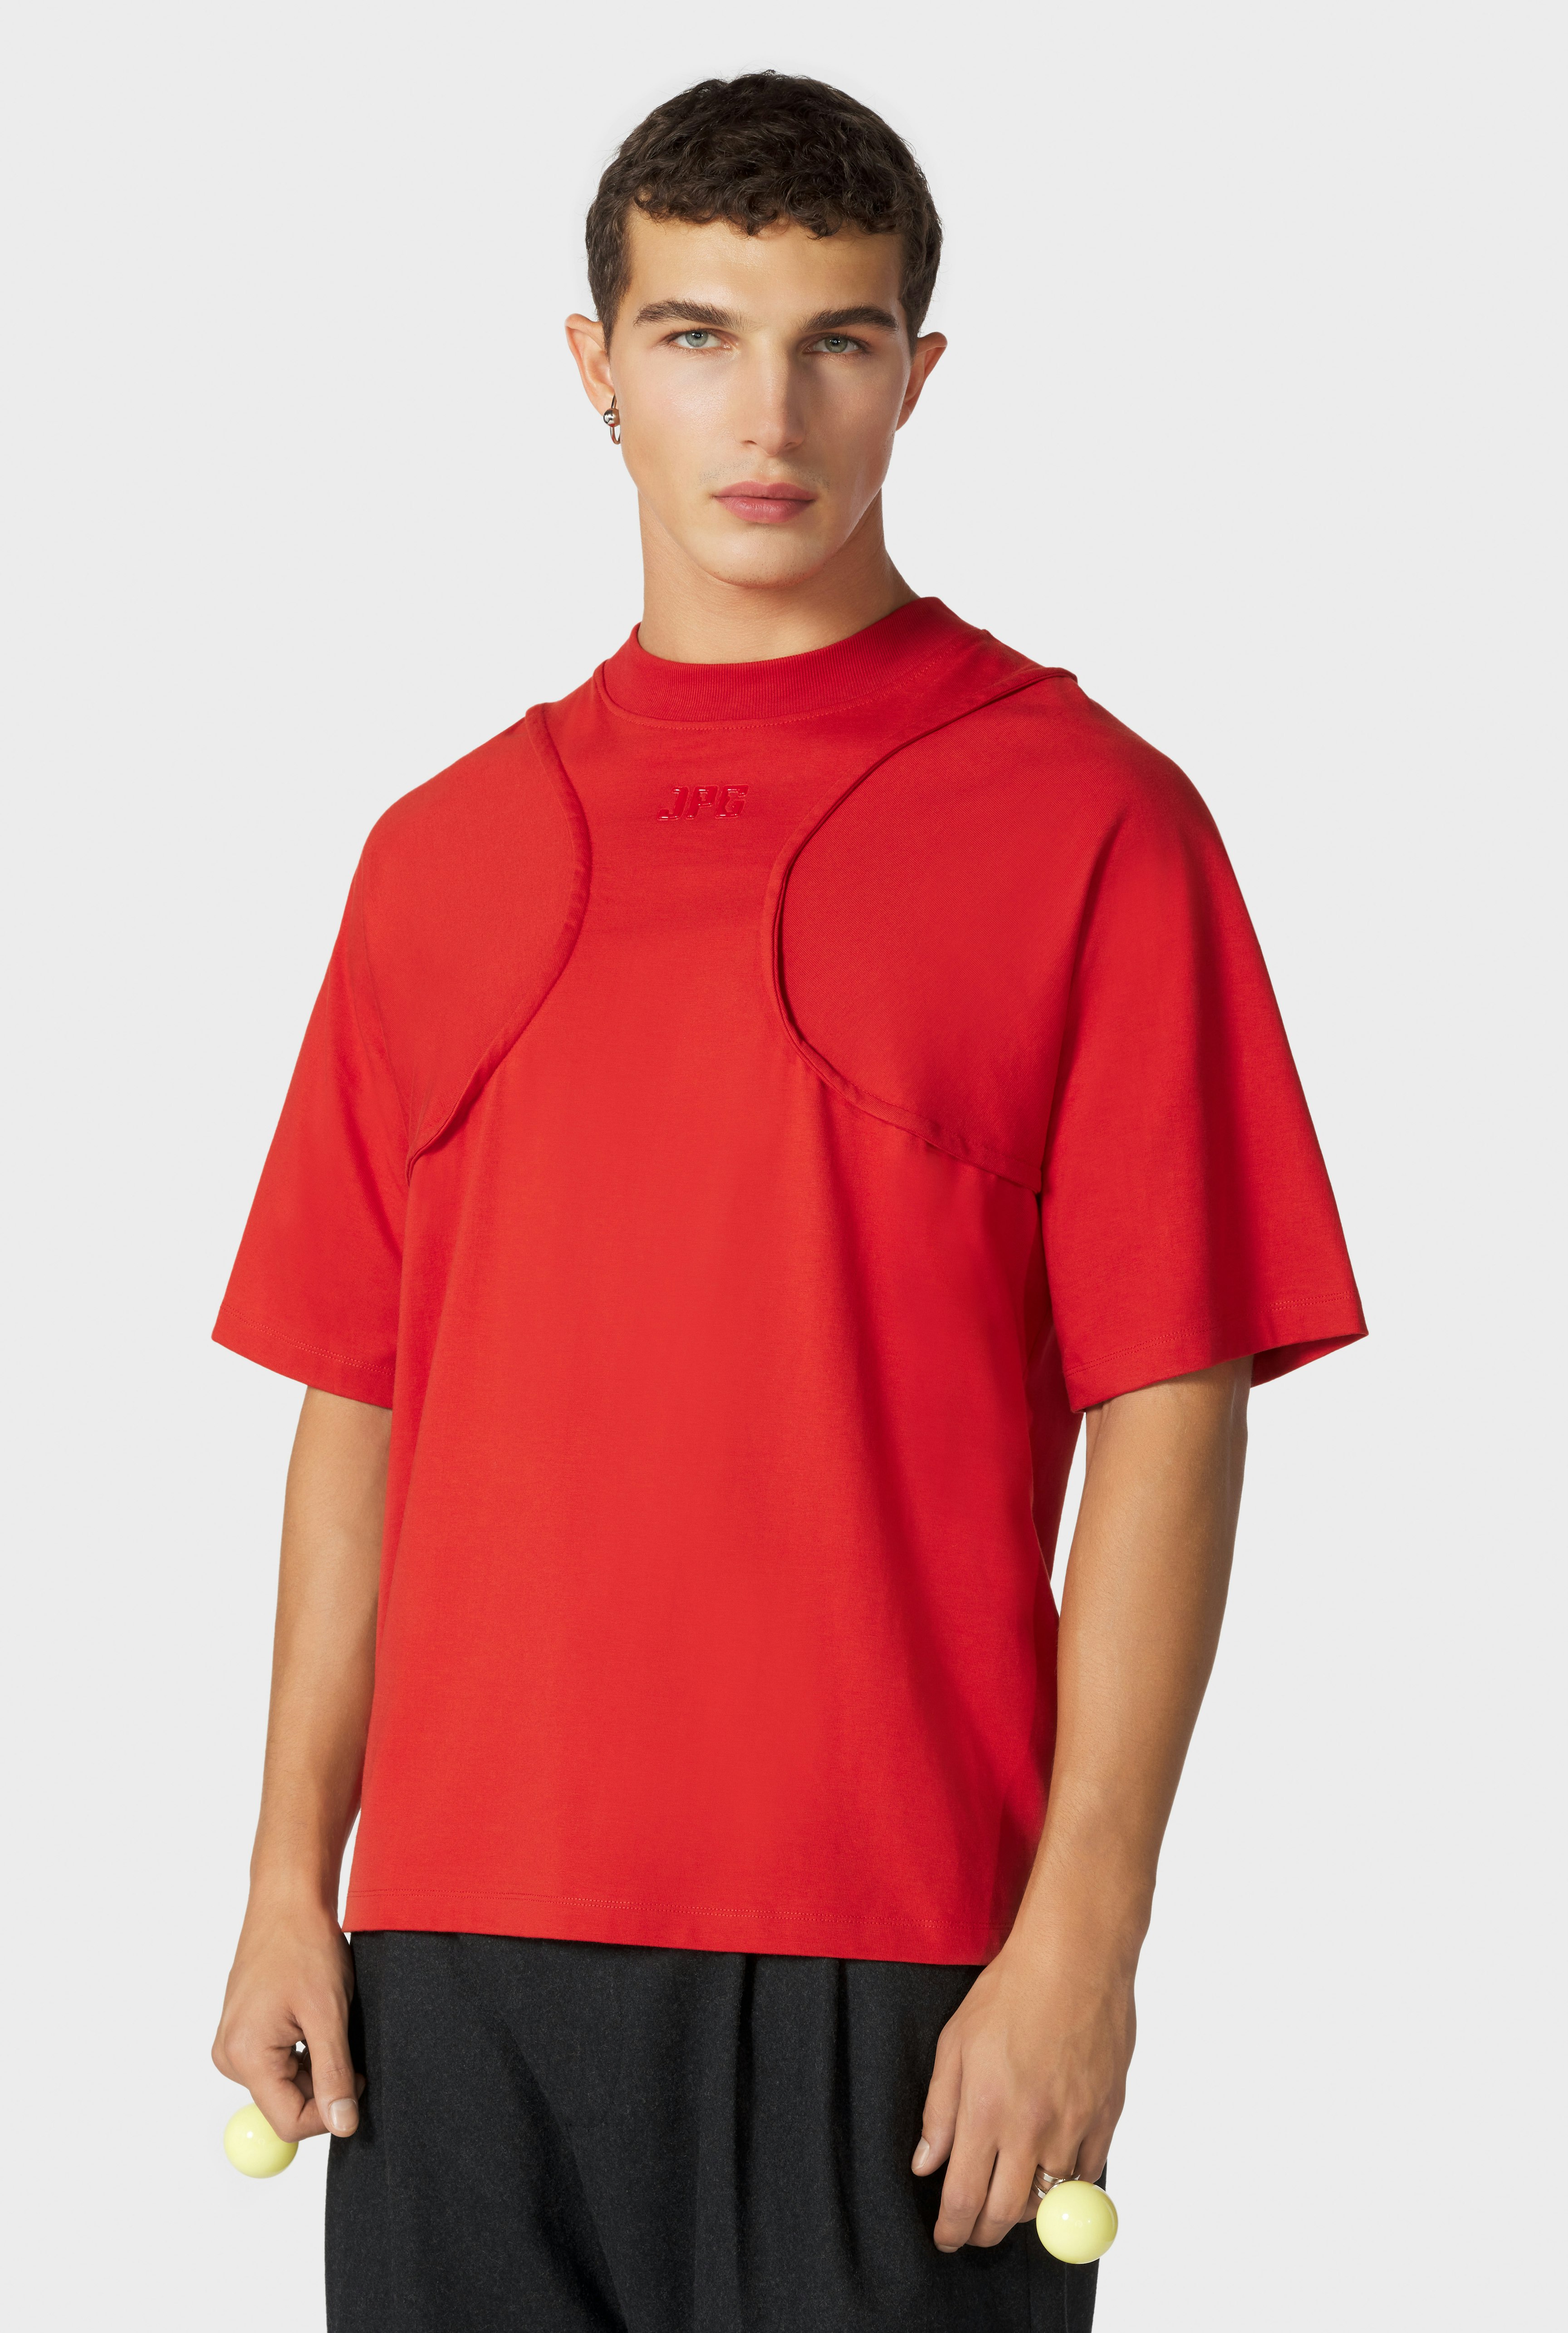 Le T-shirt JPG Rouge Jean Paul Gaultier